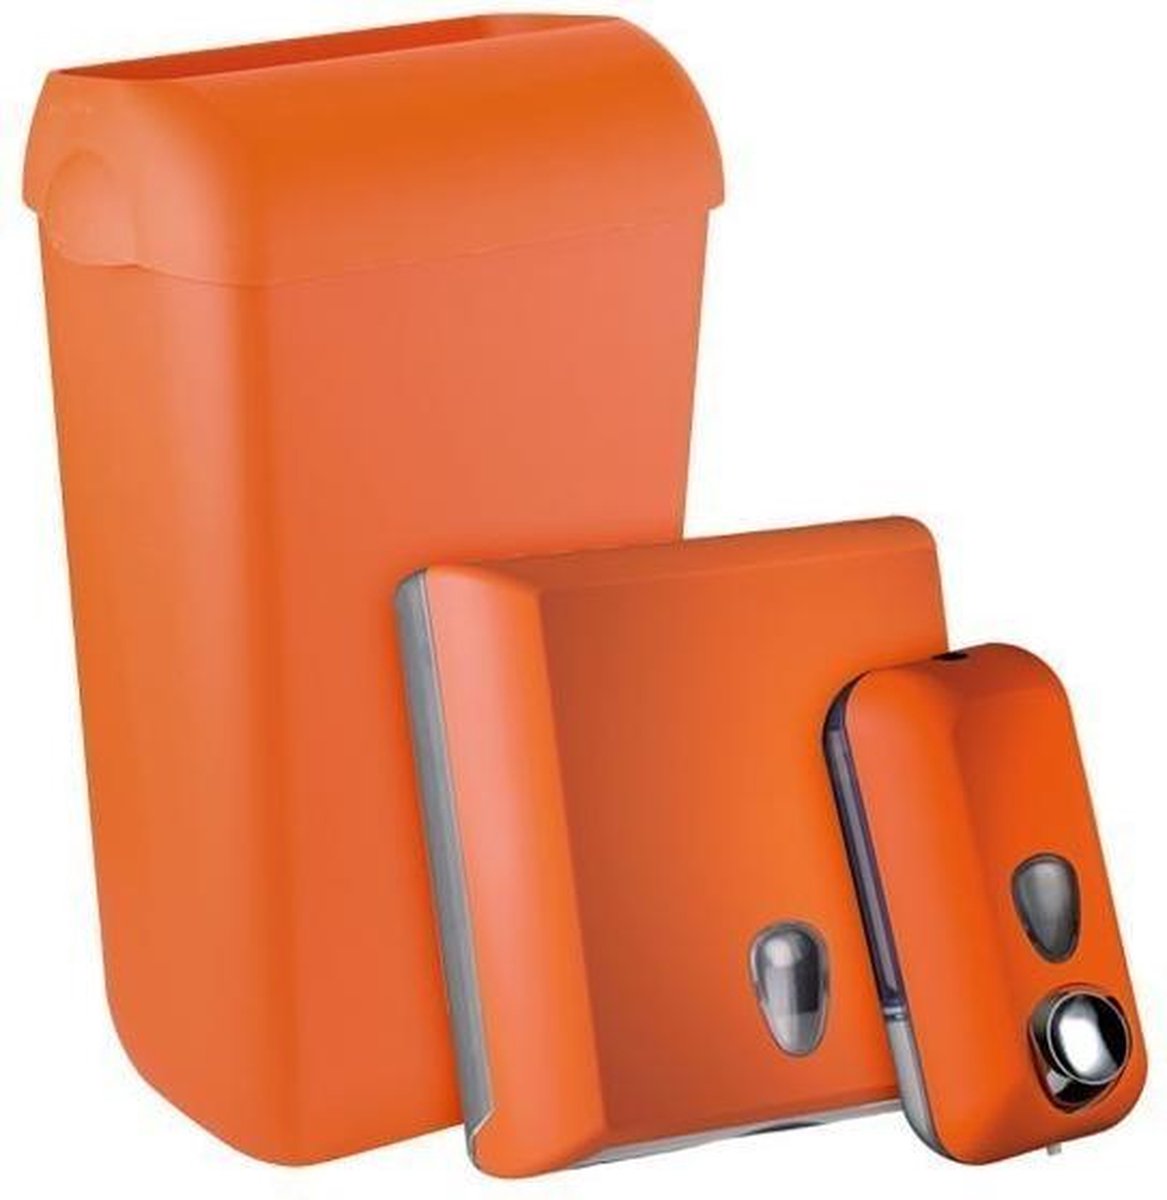 Designset - Marplast Colored Edition MP706 MP714 MP742 - Orange